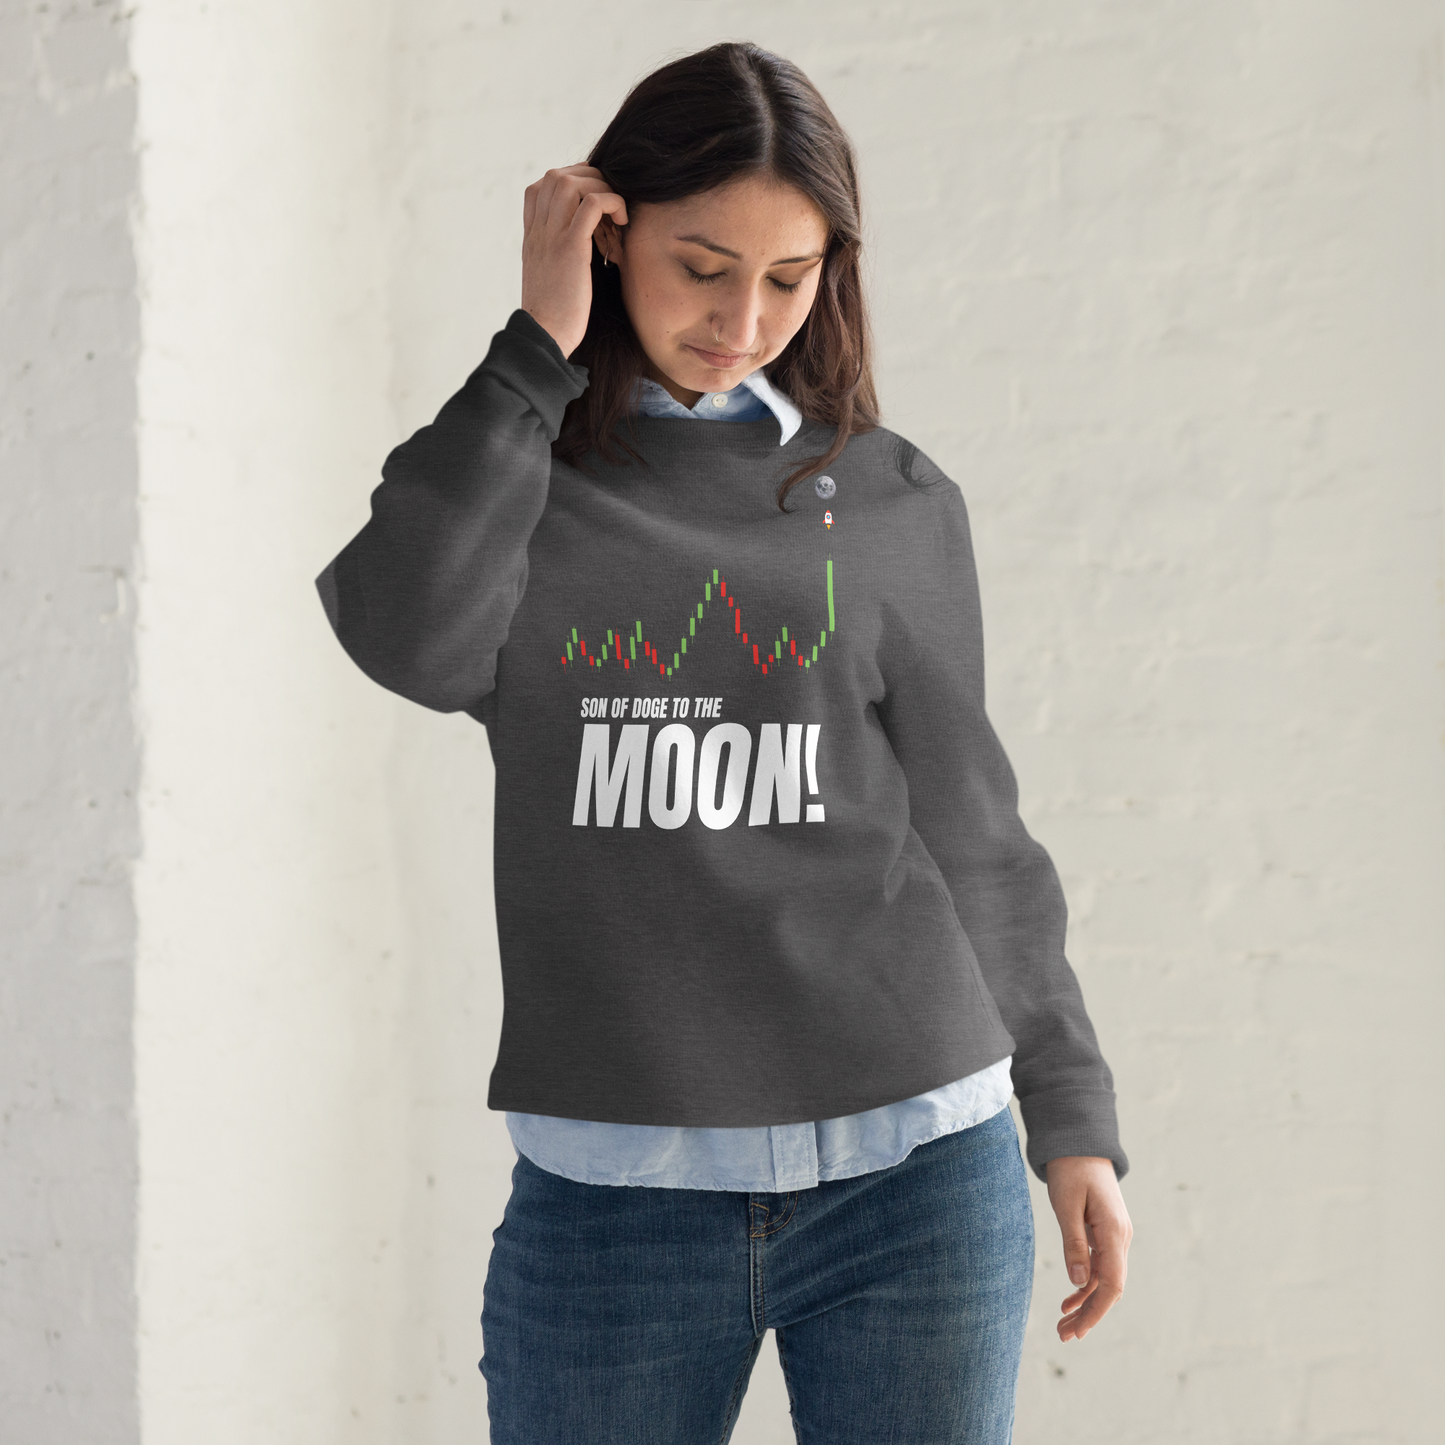 Son Of Doge 'To The Moon' Women's fashion sweatshirt